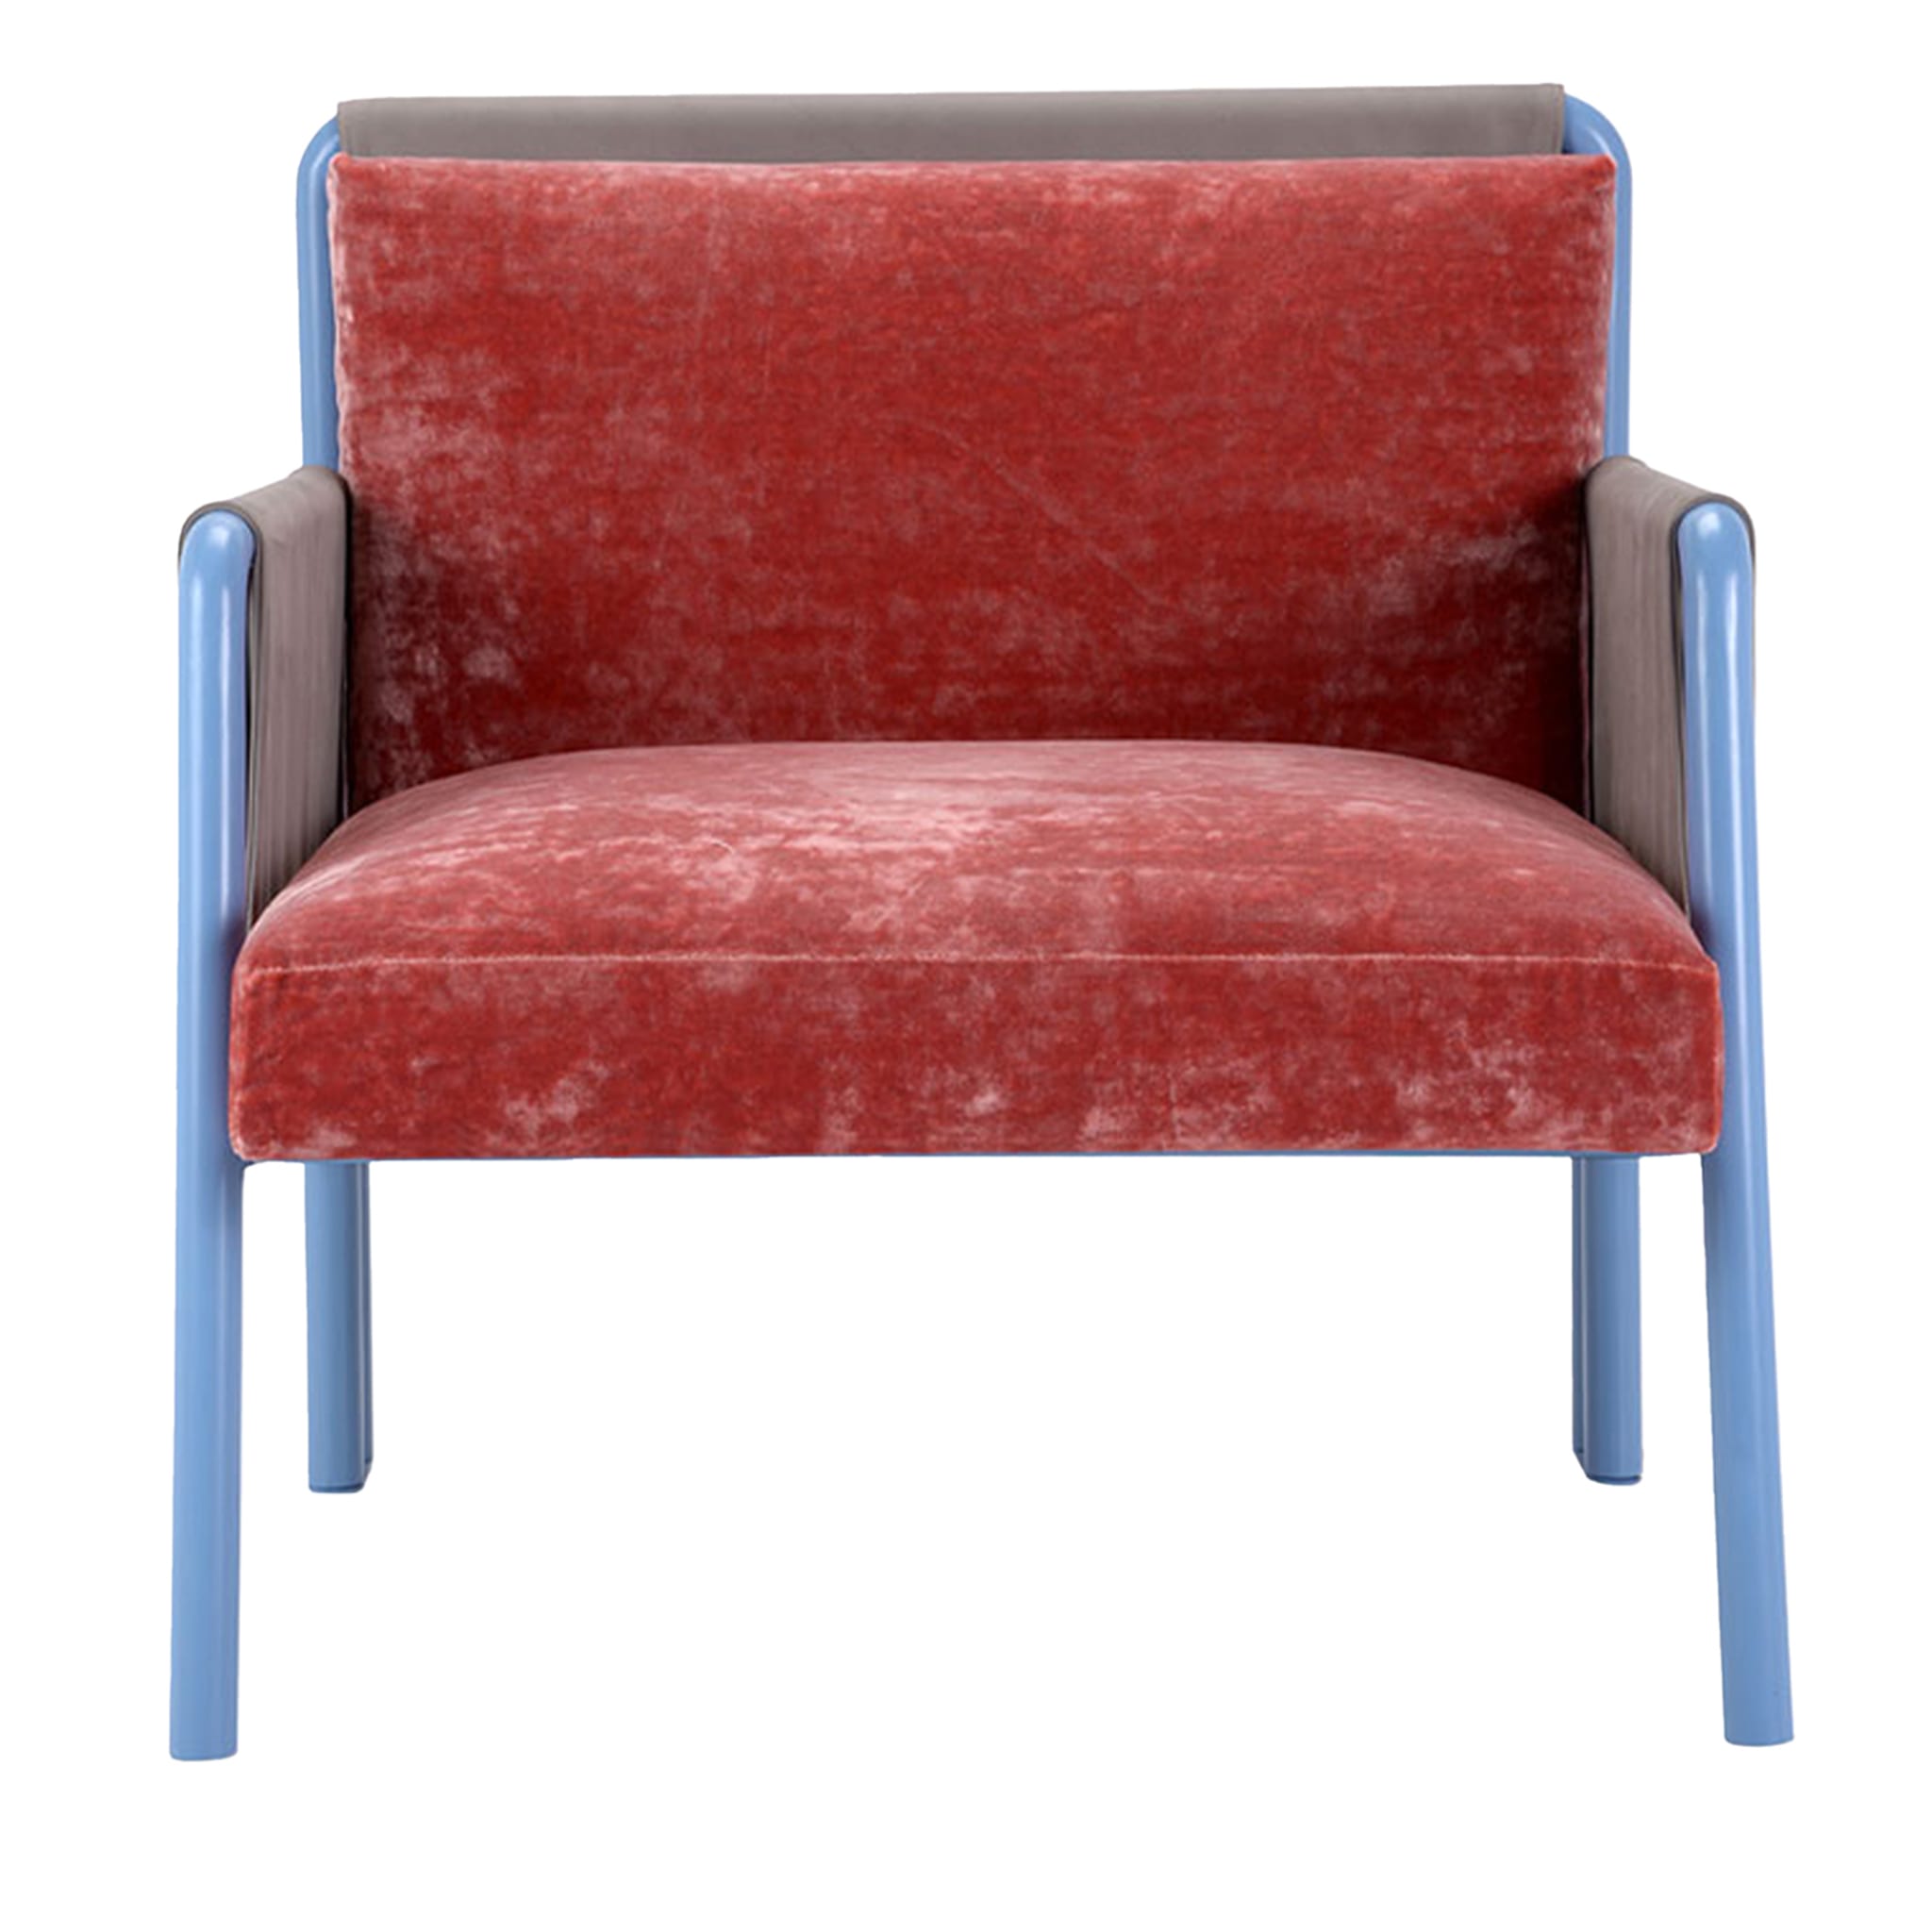 Swing Red Chenille & Azure Armchair by Debonademeo - Main view